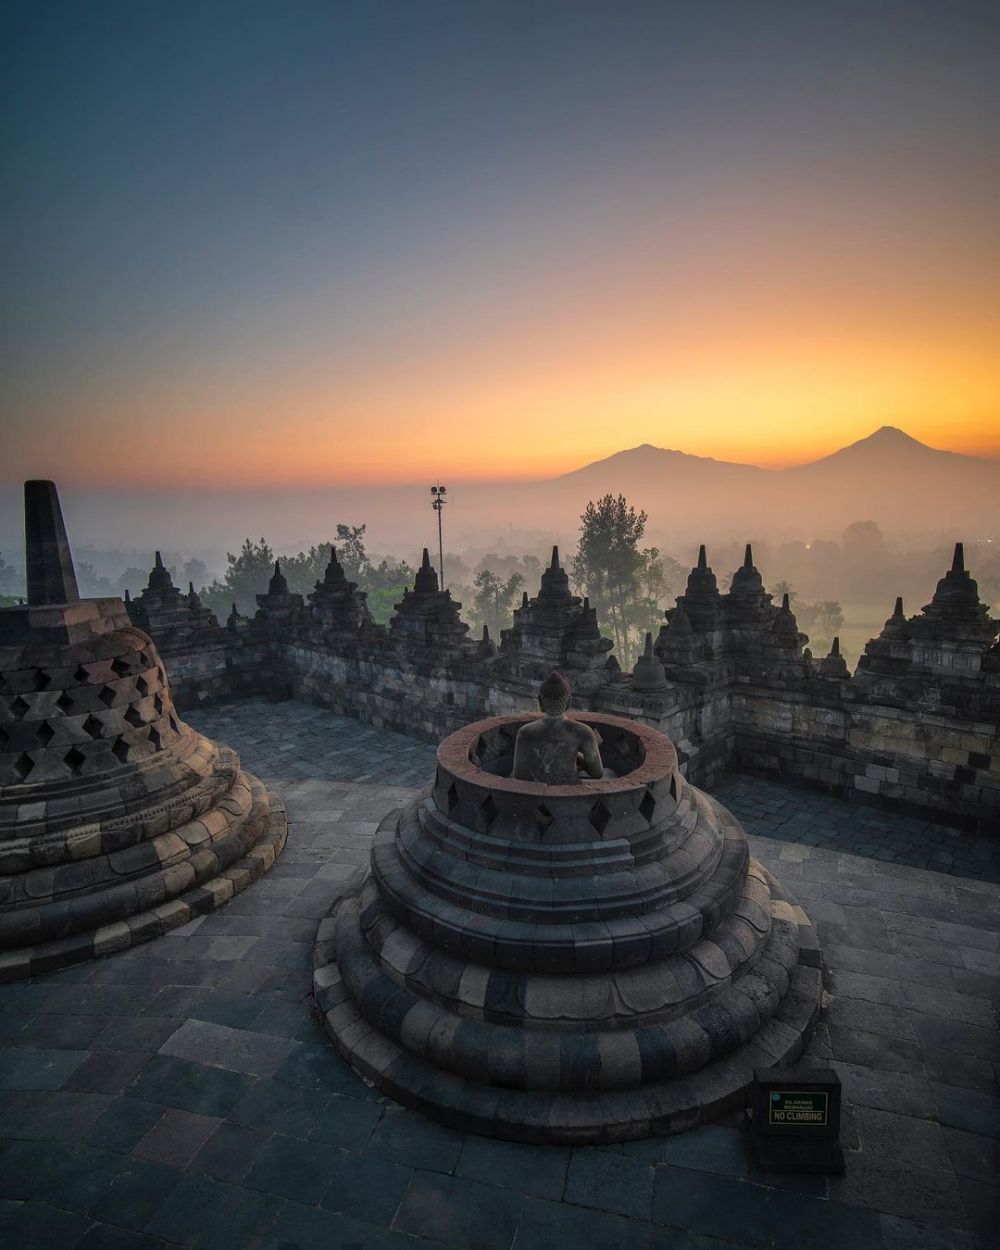 Pemasangan Chattra Candi Borobudur Tambah Aura Spiritual Umat Buddha